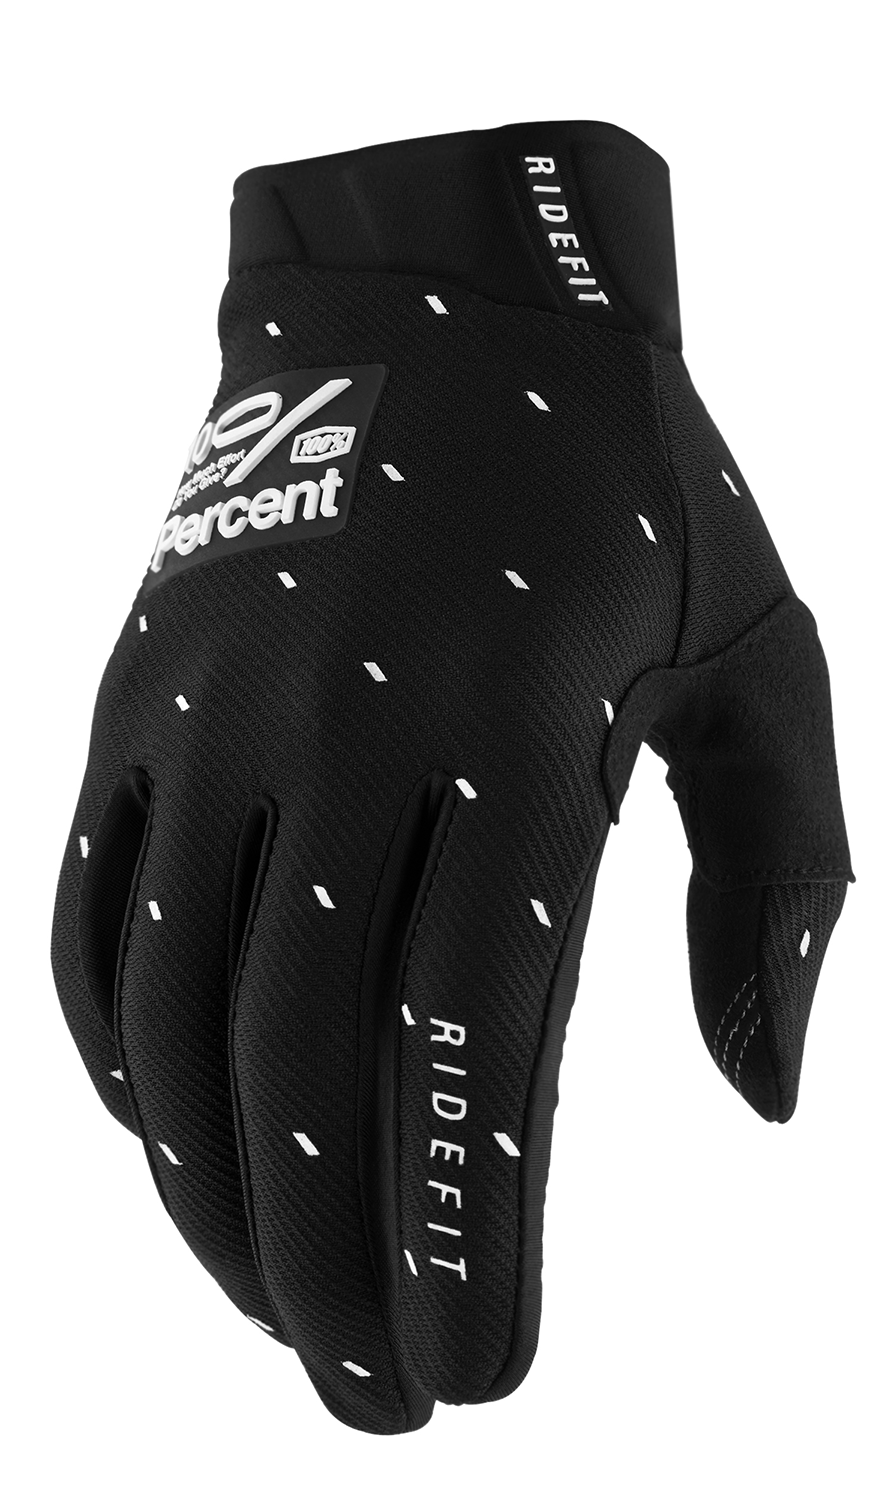 Ridefit Gloves - Slasher Black - Large